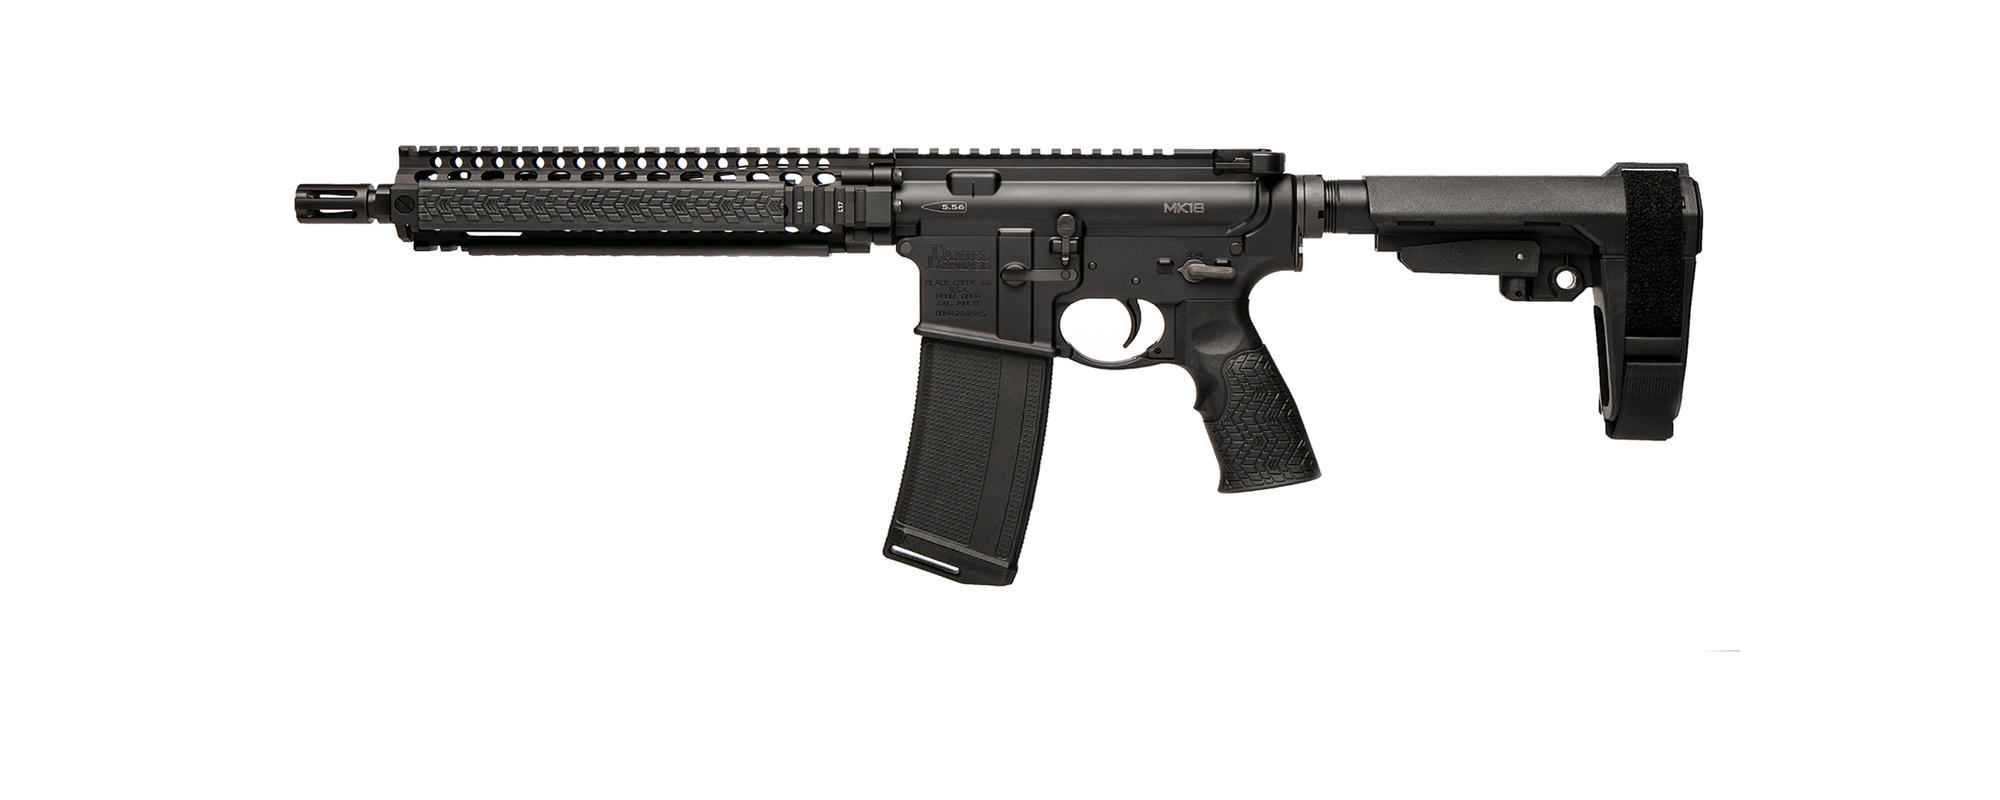 Daniel Defense DDM4 MK18 5.56mm Pistol, Black, with SBA3 Brace (02-088-01202)